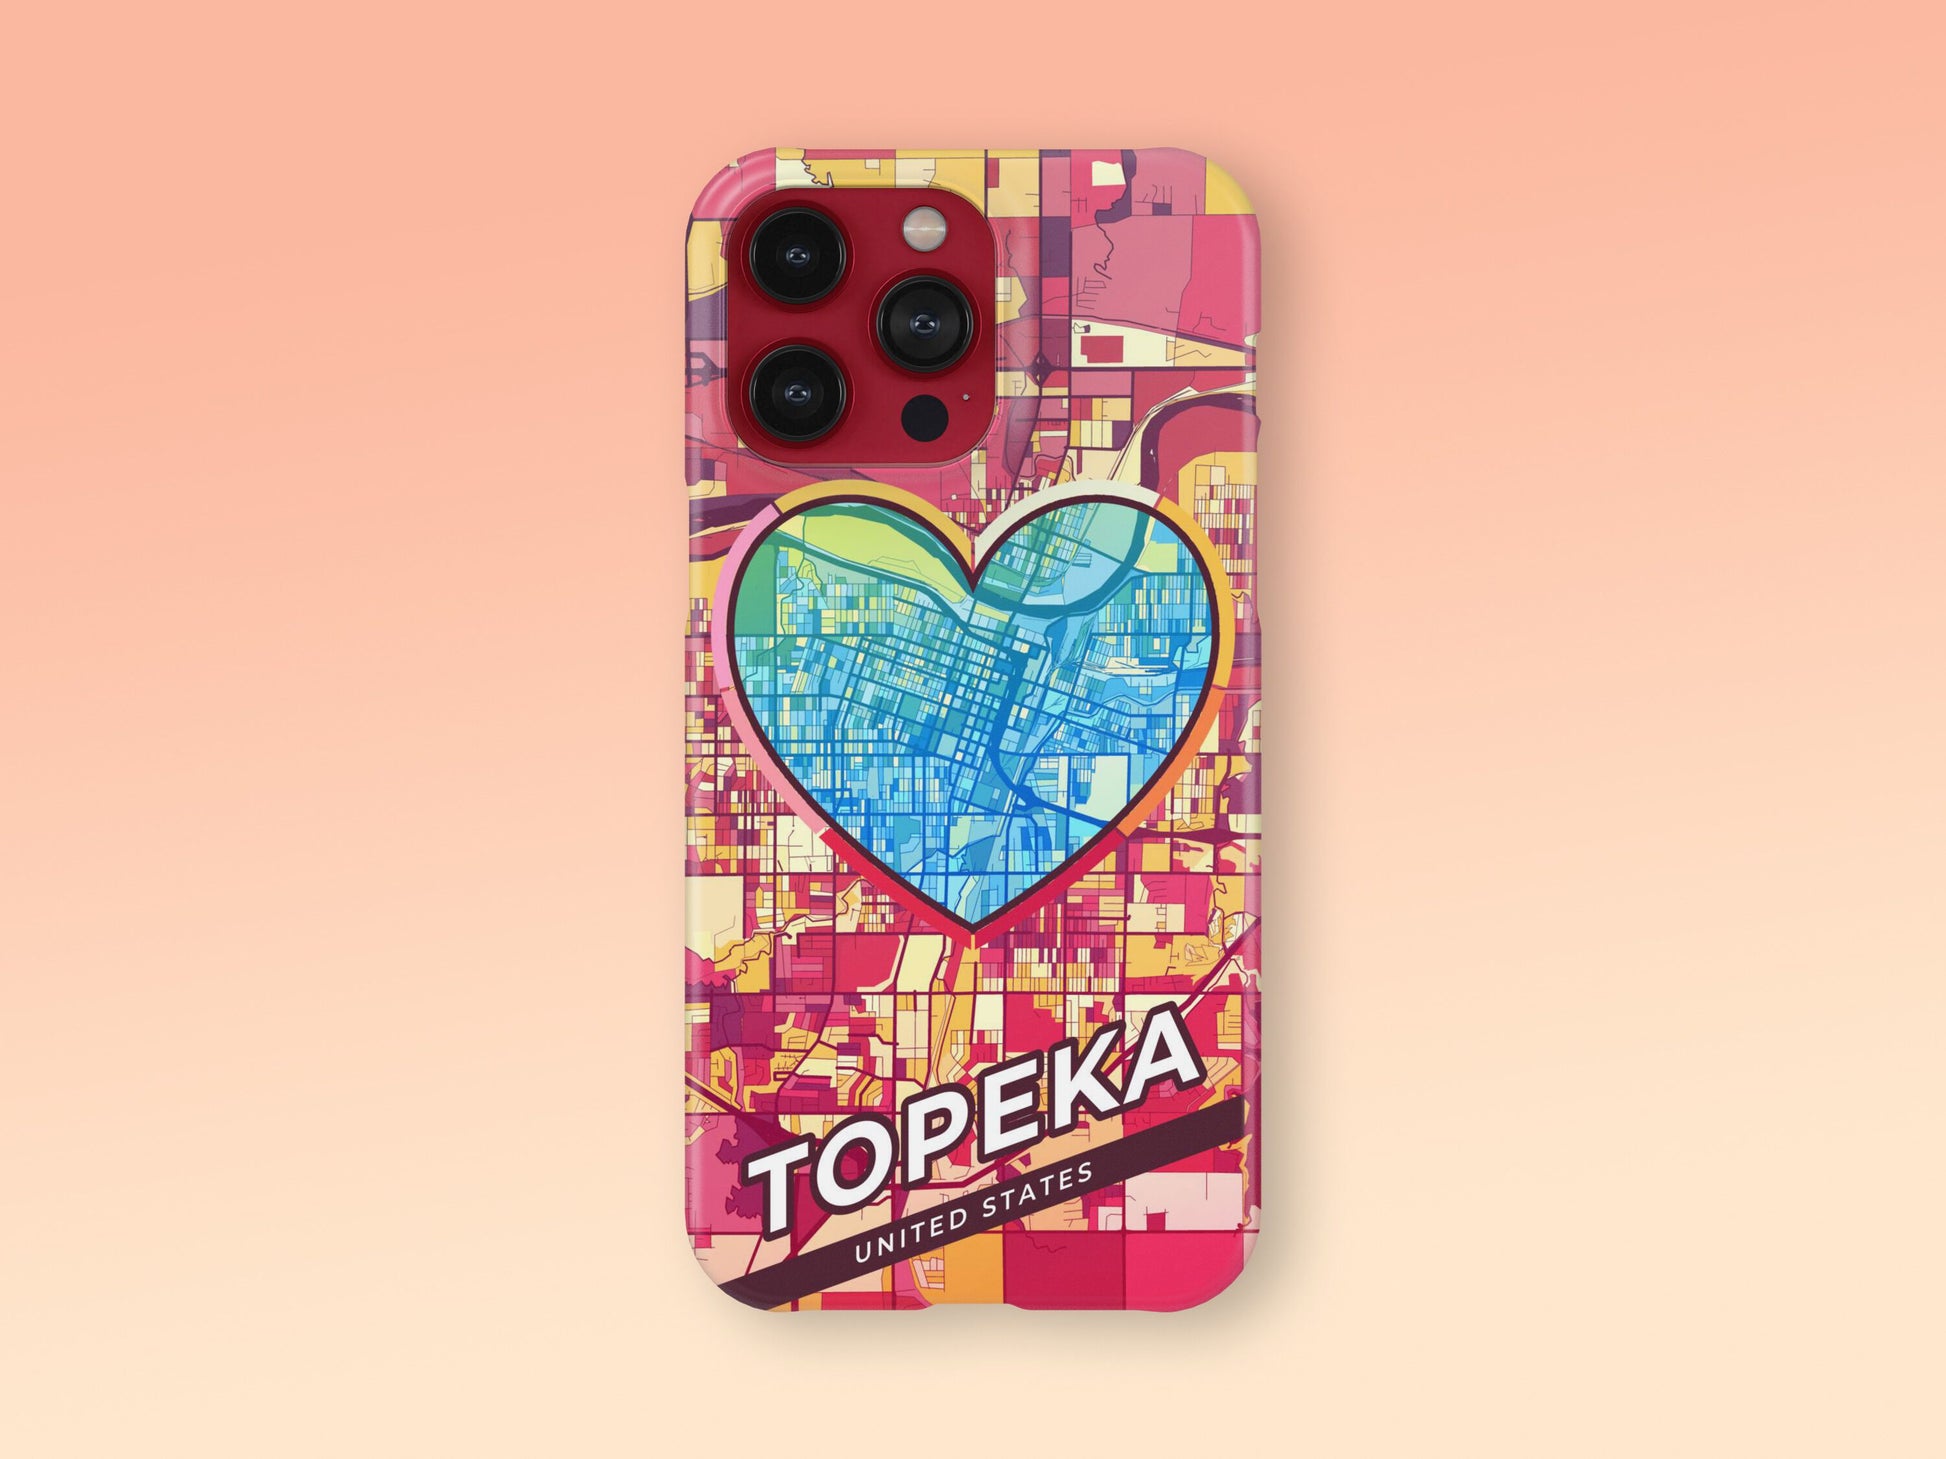 Topeka Kansas slim phone case with colorful icon 2